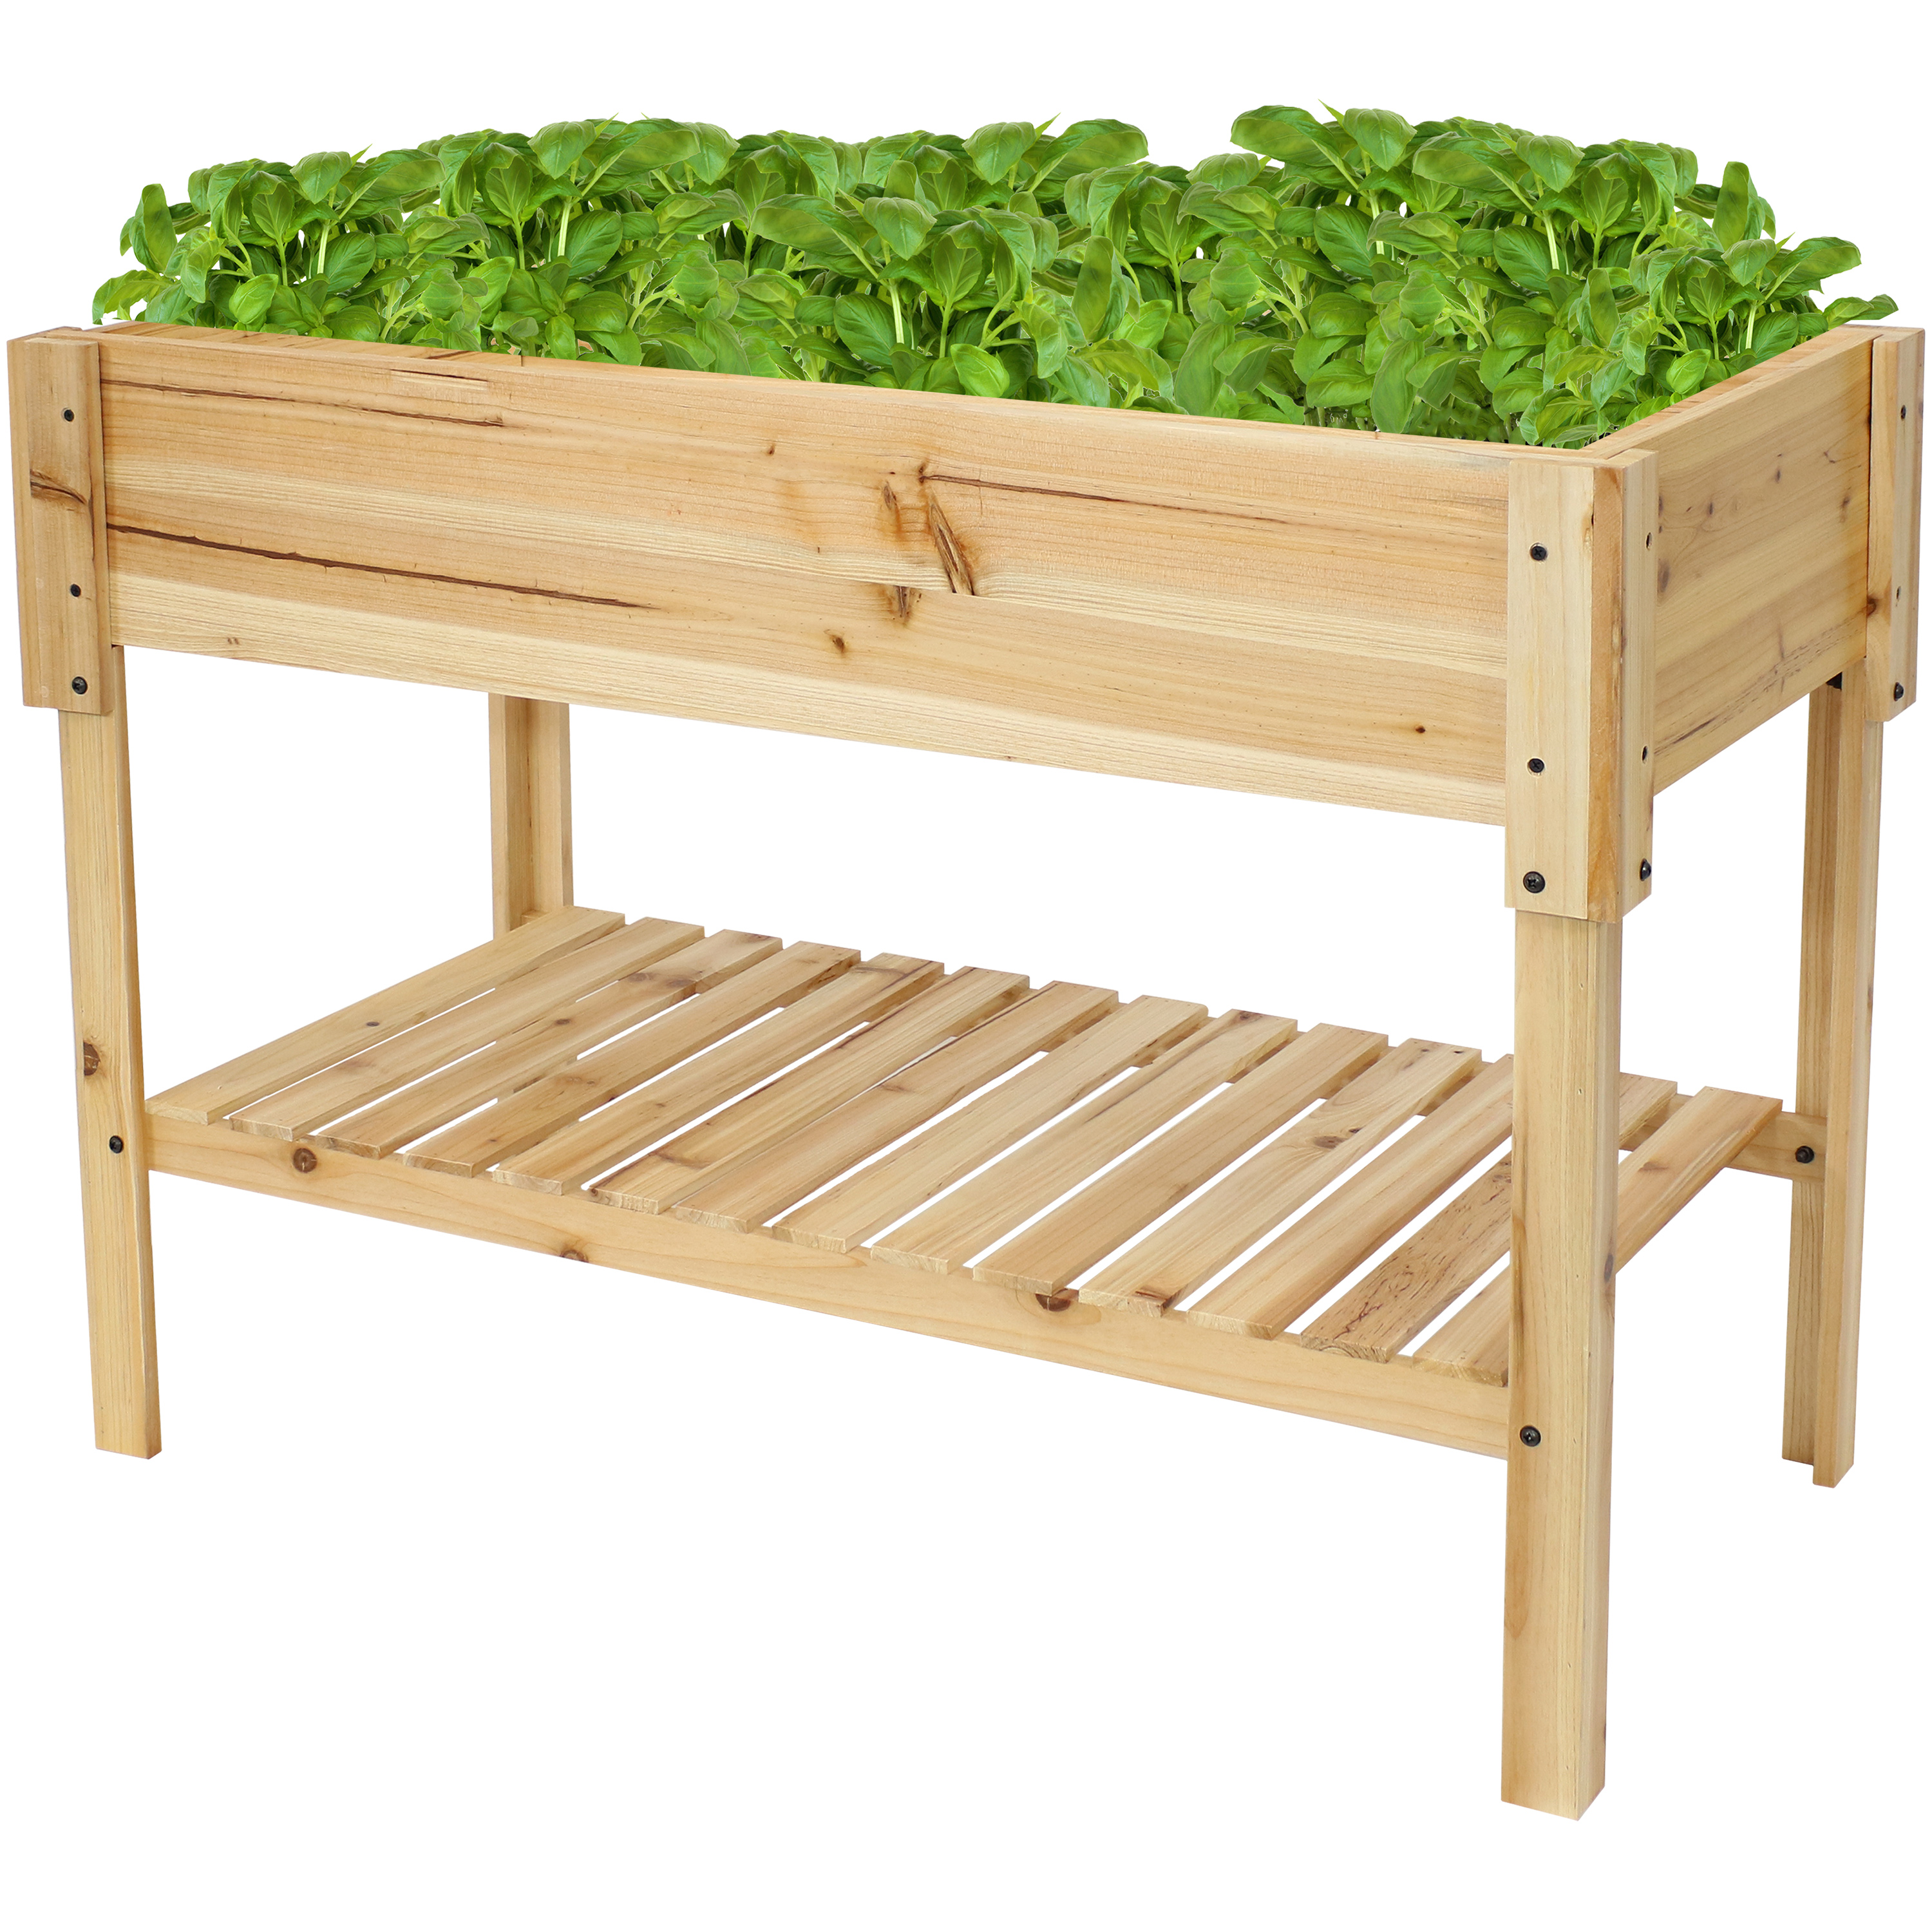 Sunnydaze Raised Wood Garden Bed Planter Box with Shelf - 42-Inch - Clear Coat